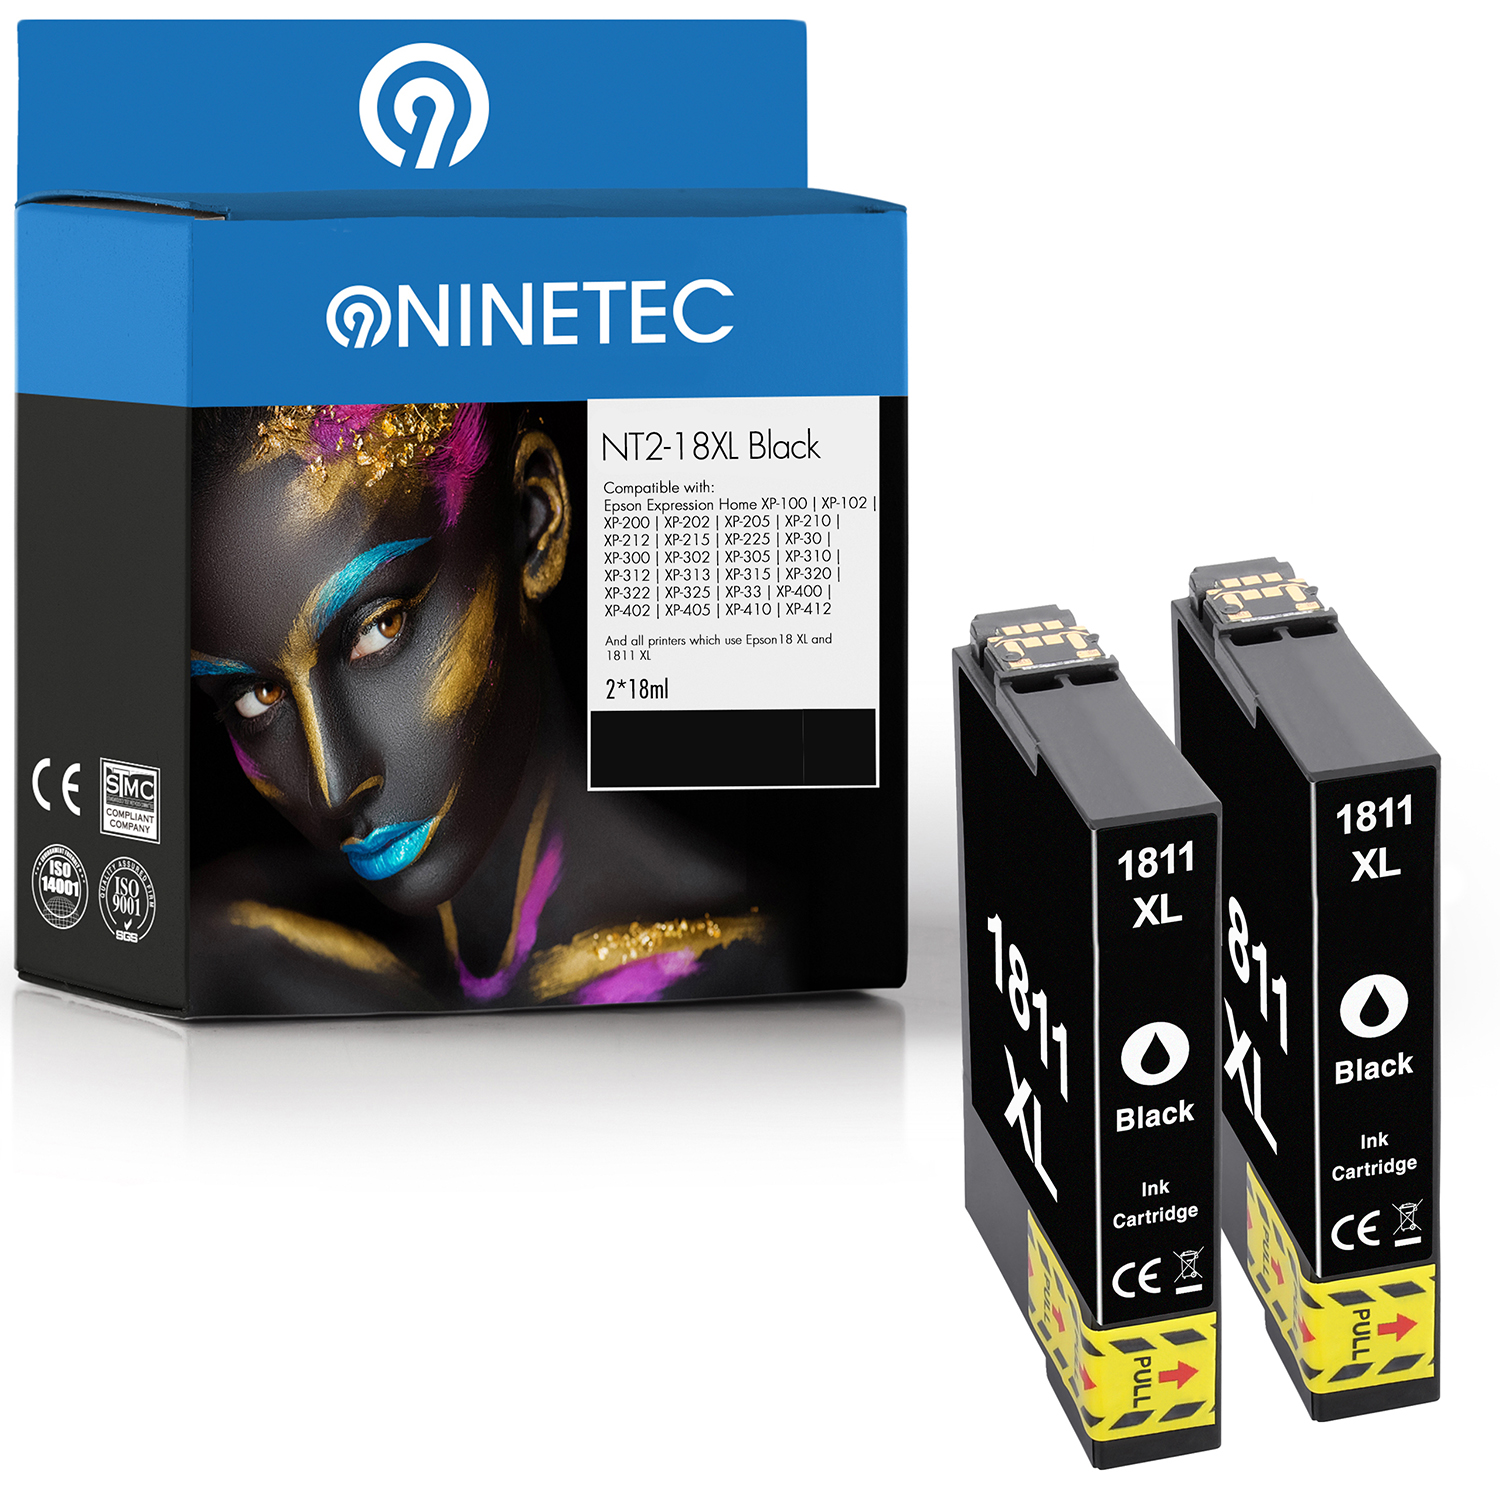 NINETEC 2er Set ersetzt Epson black Tintenpatronen 13 T1811 18114511) T (C